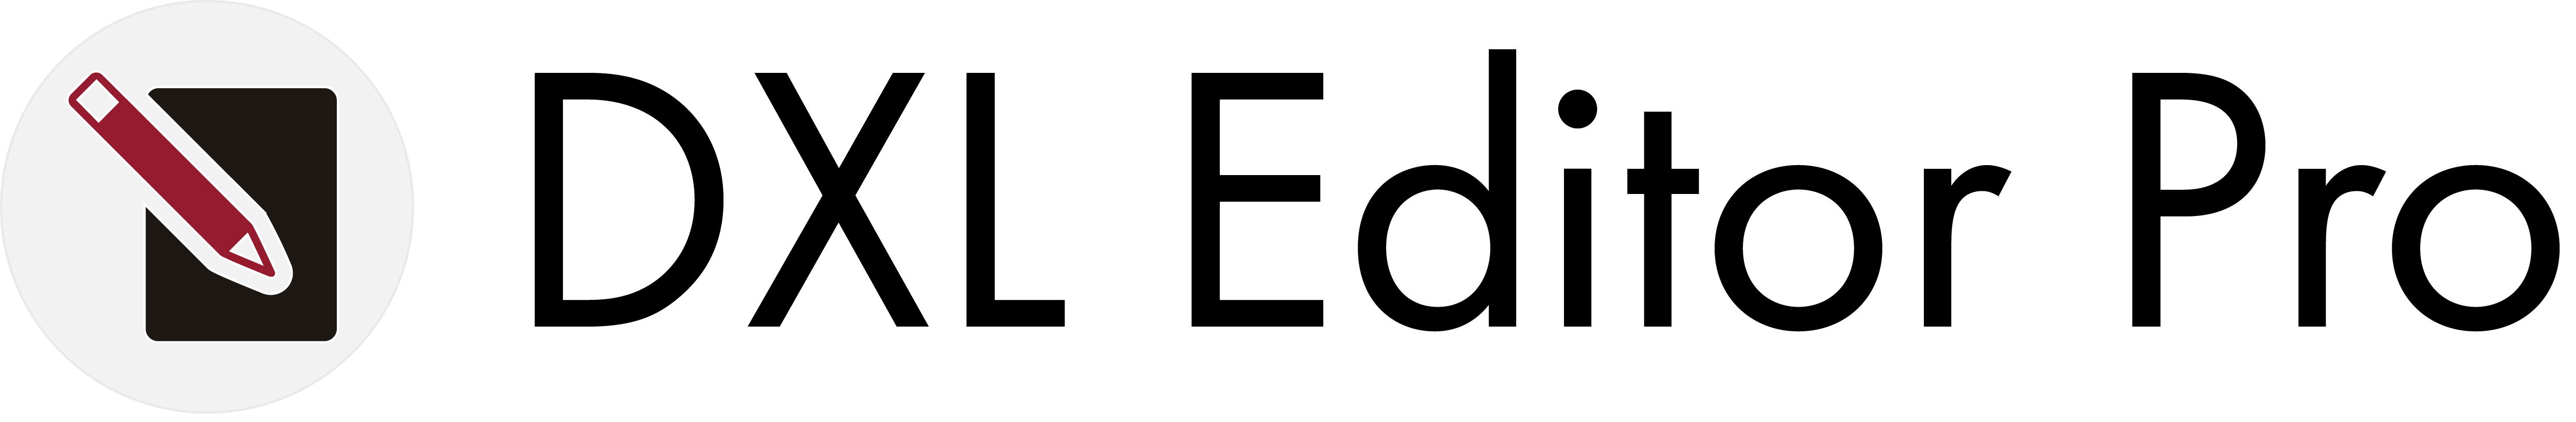 Logo_DXL Editor_SodiusWillert_022021_BLACK-1